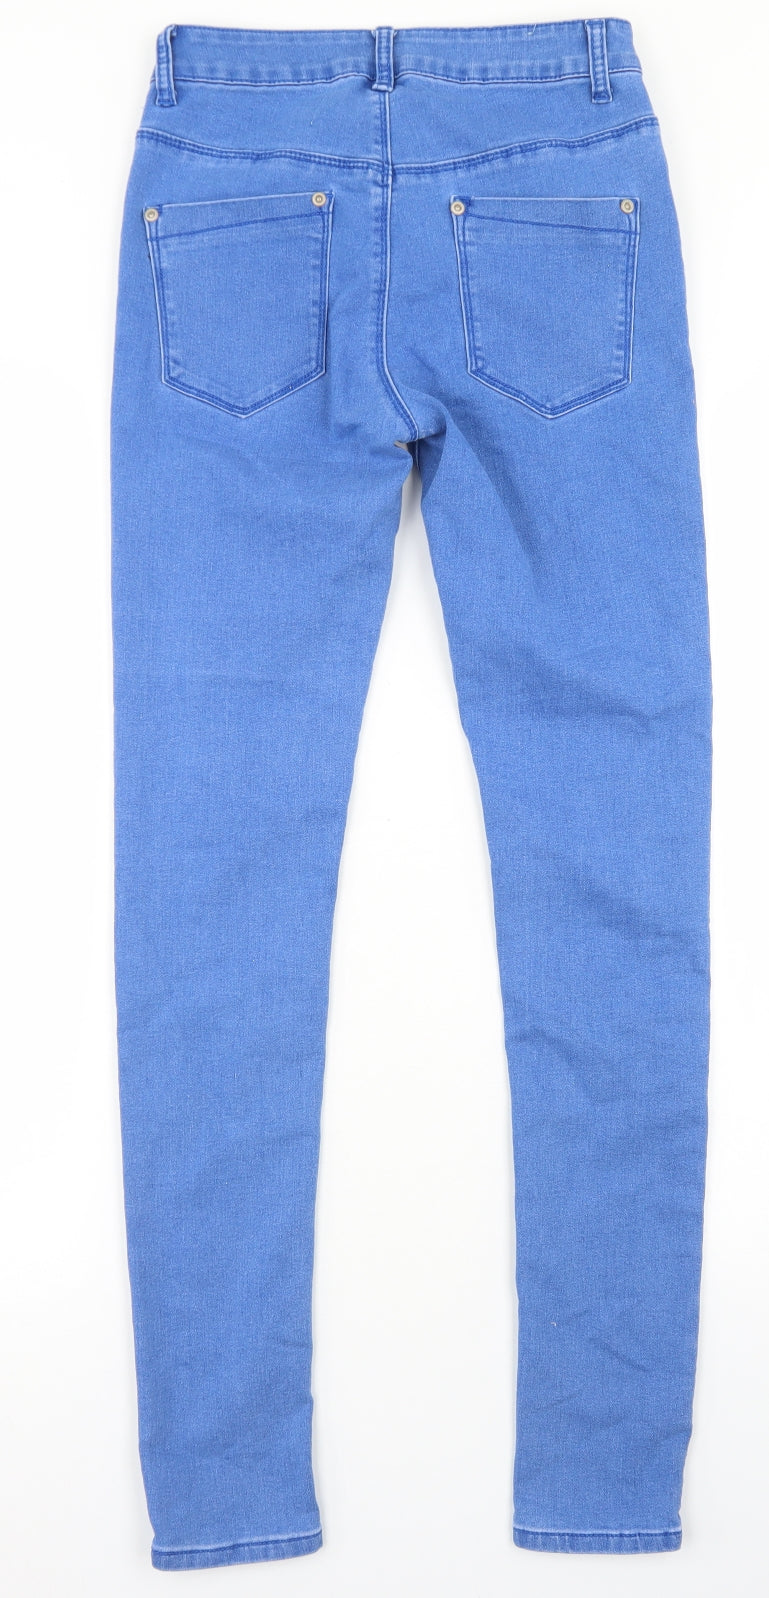 Esmara Women's Jeans Uk 14 Blue 100% Cotton